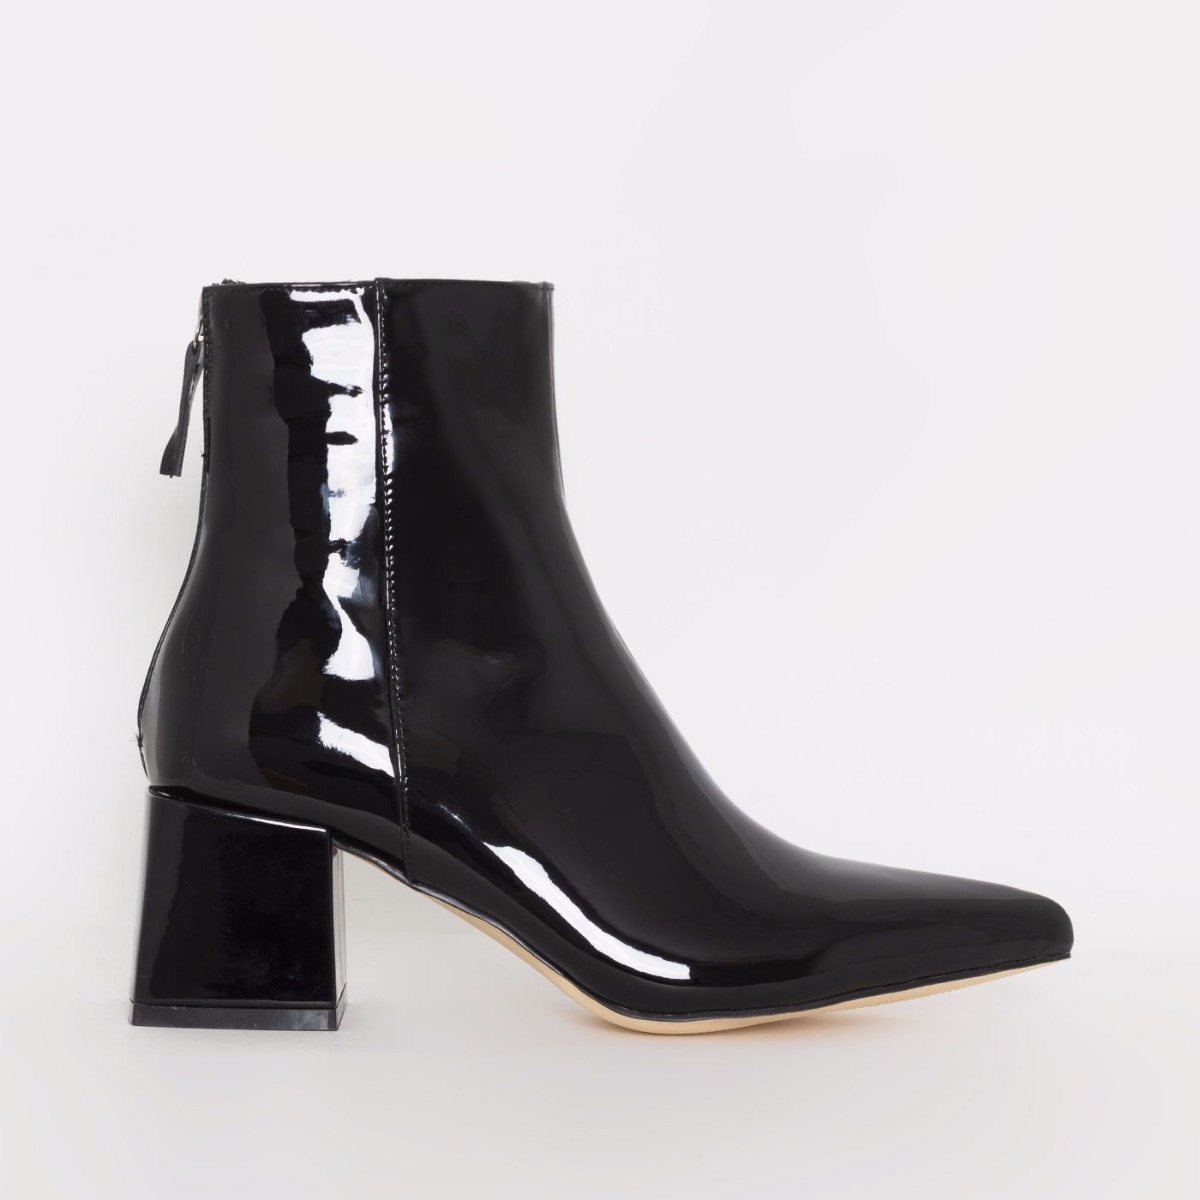 Fabian Black Patent Pointed Toe Block Heel Ankle Boots | SIMMI London